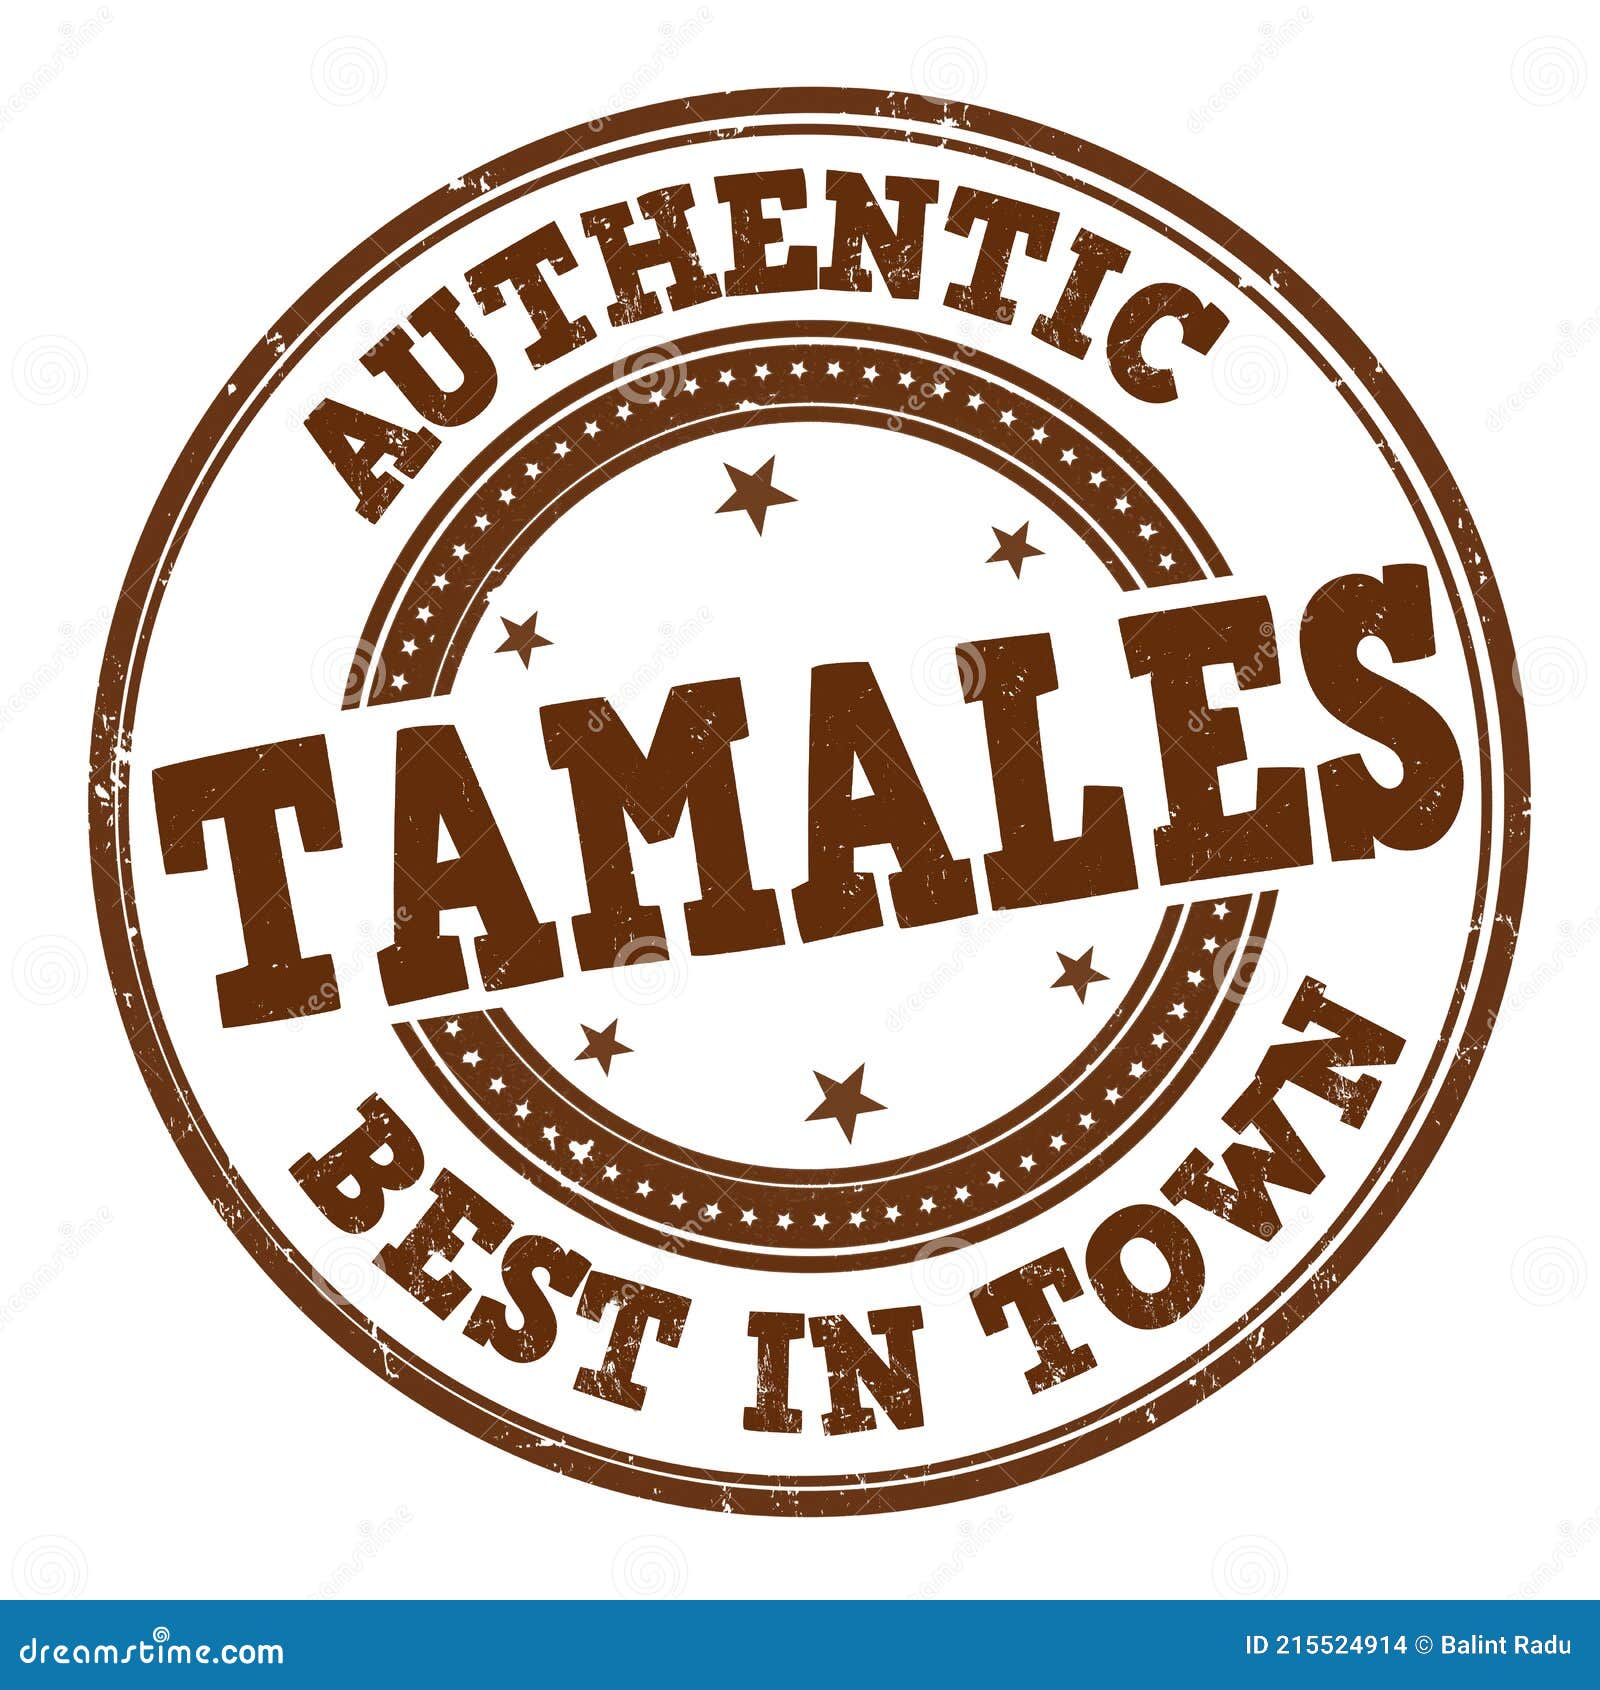 tamales grunge rubber stamp